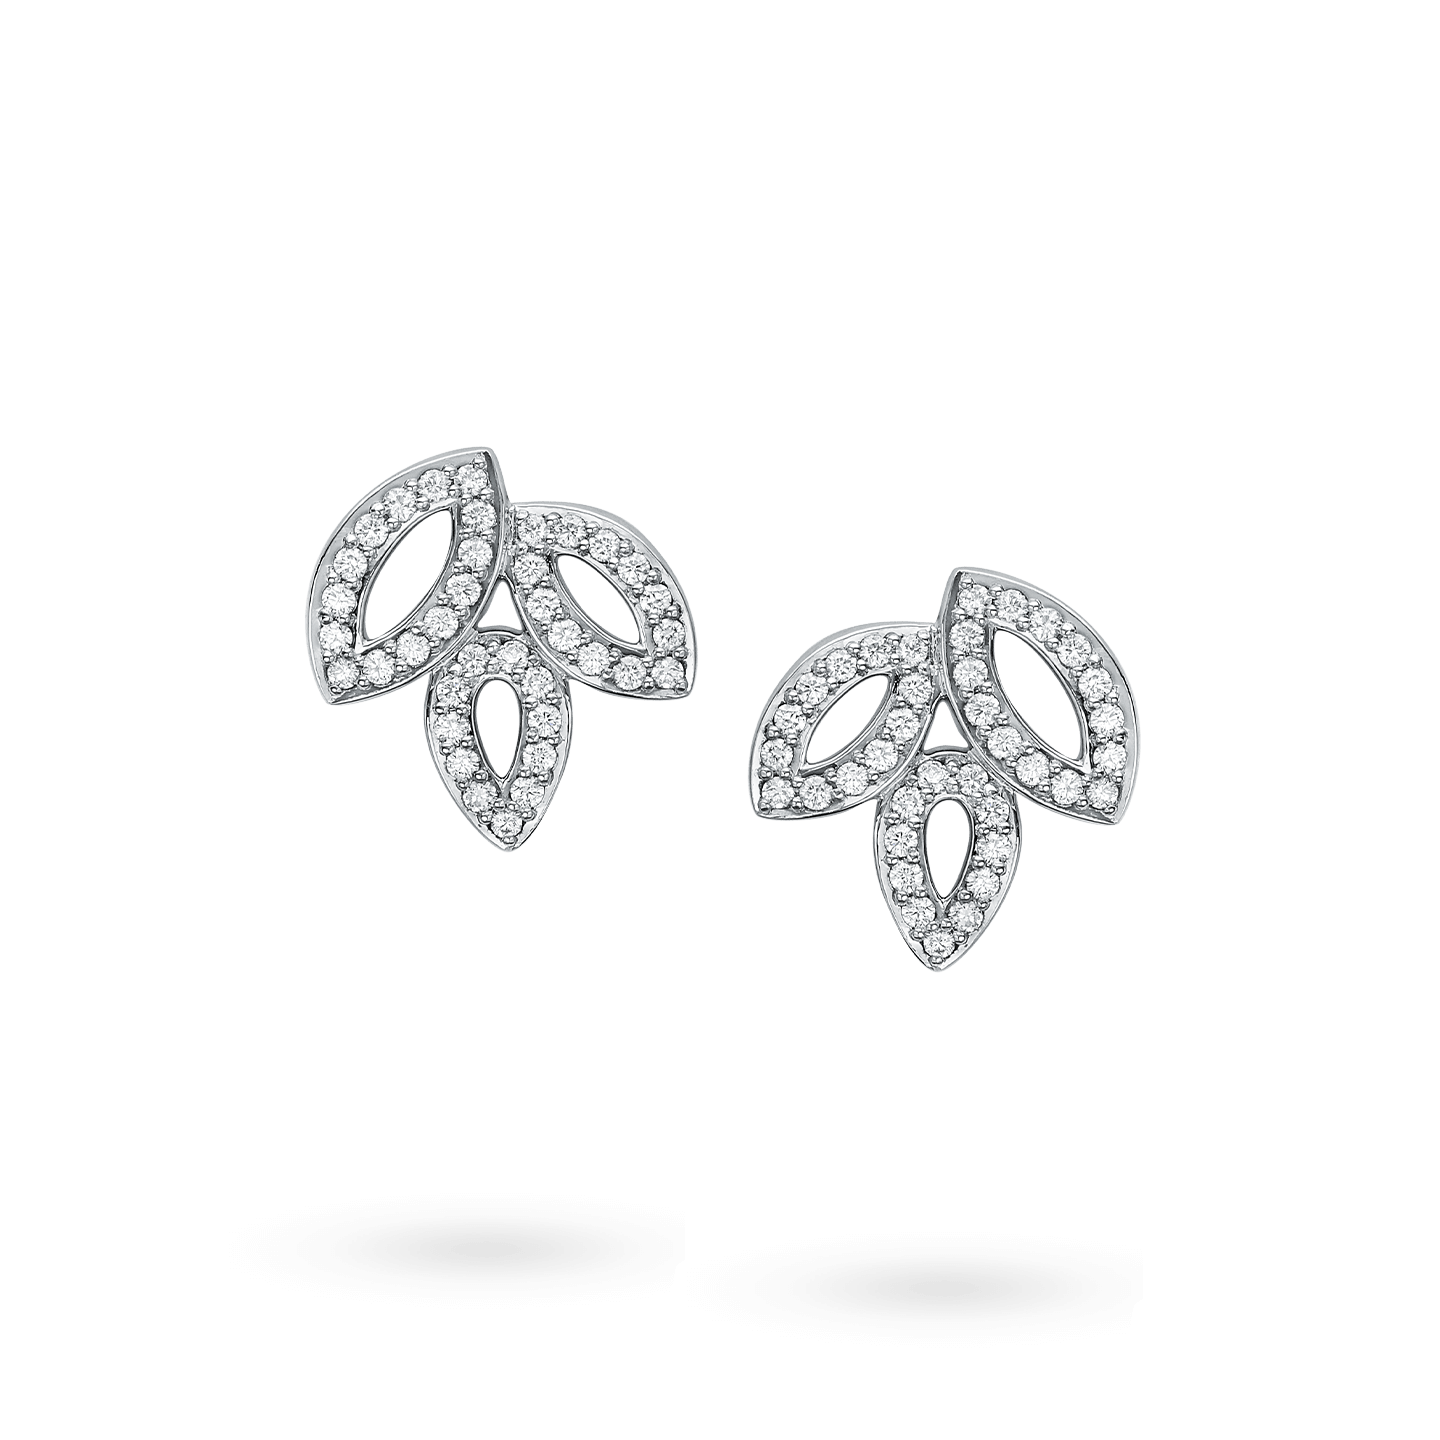 Pink Diamond Rose Gold Earrings - 1.44 ct. - Rough Diamonds